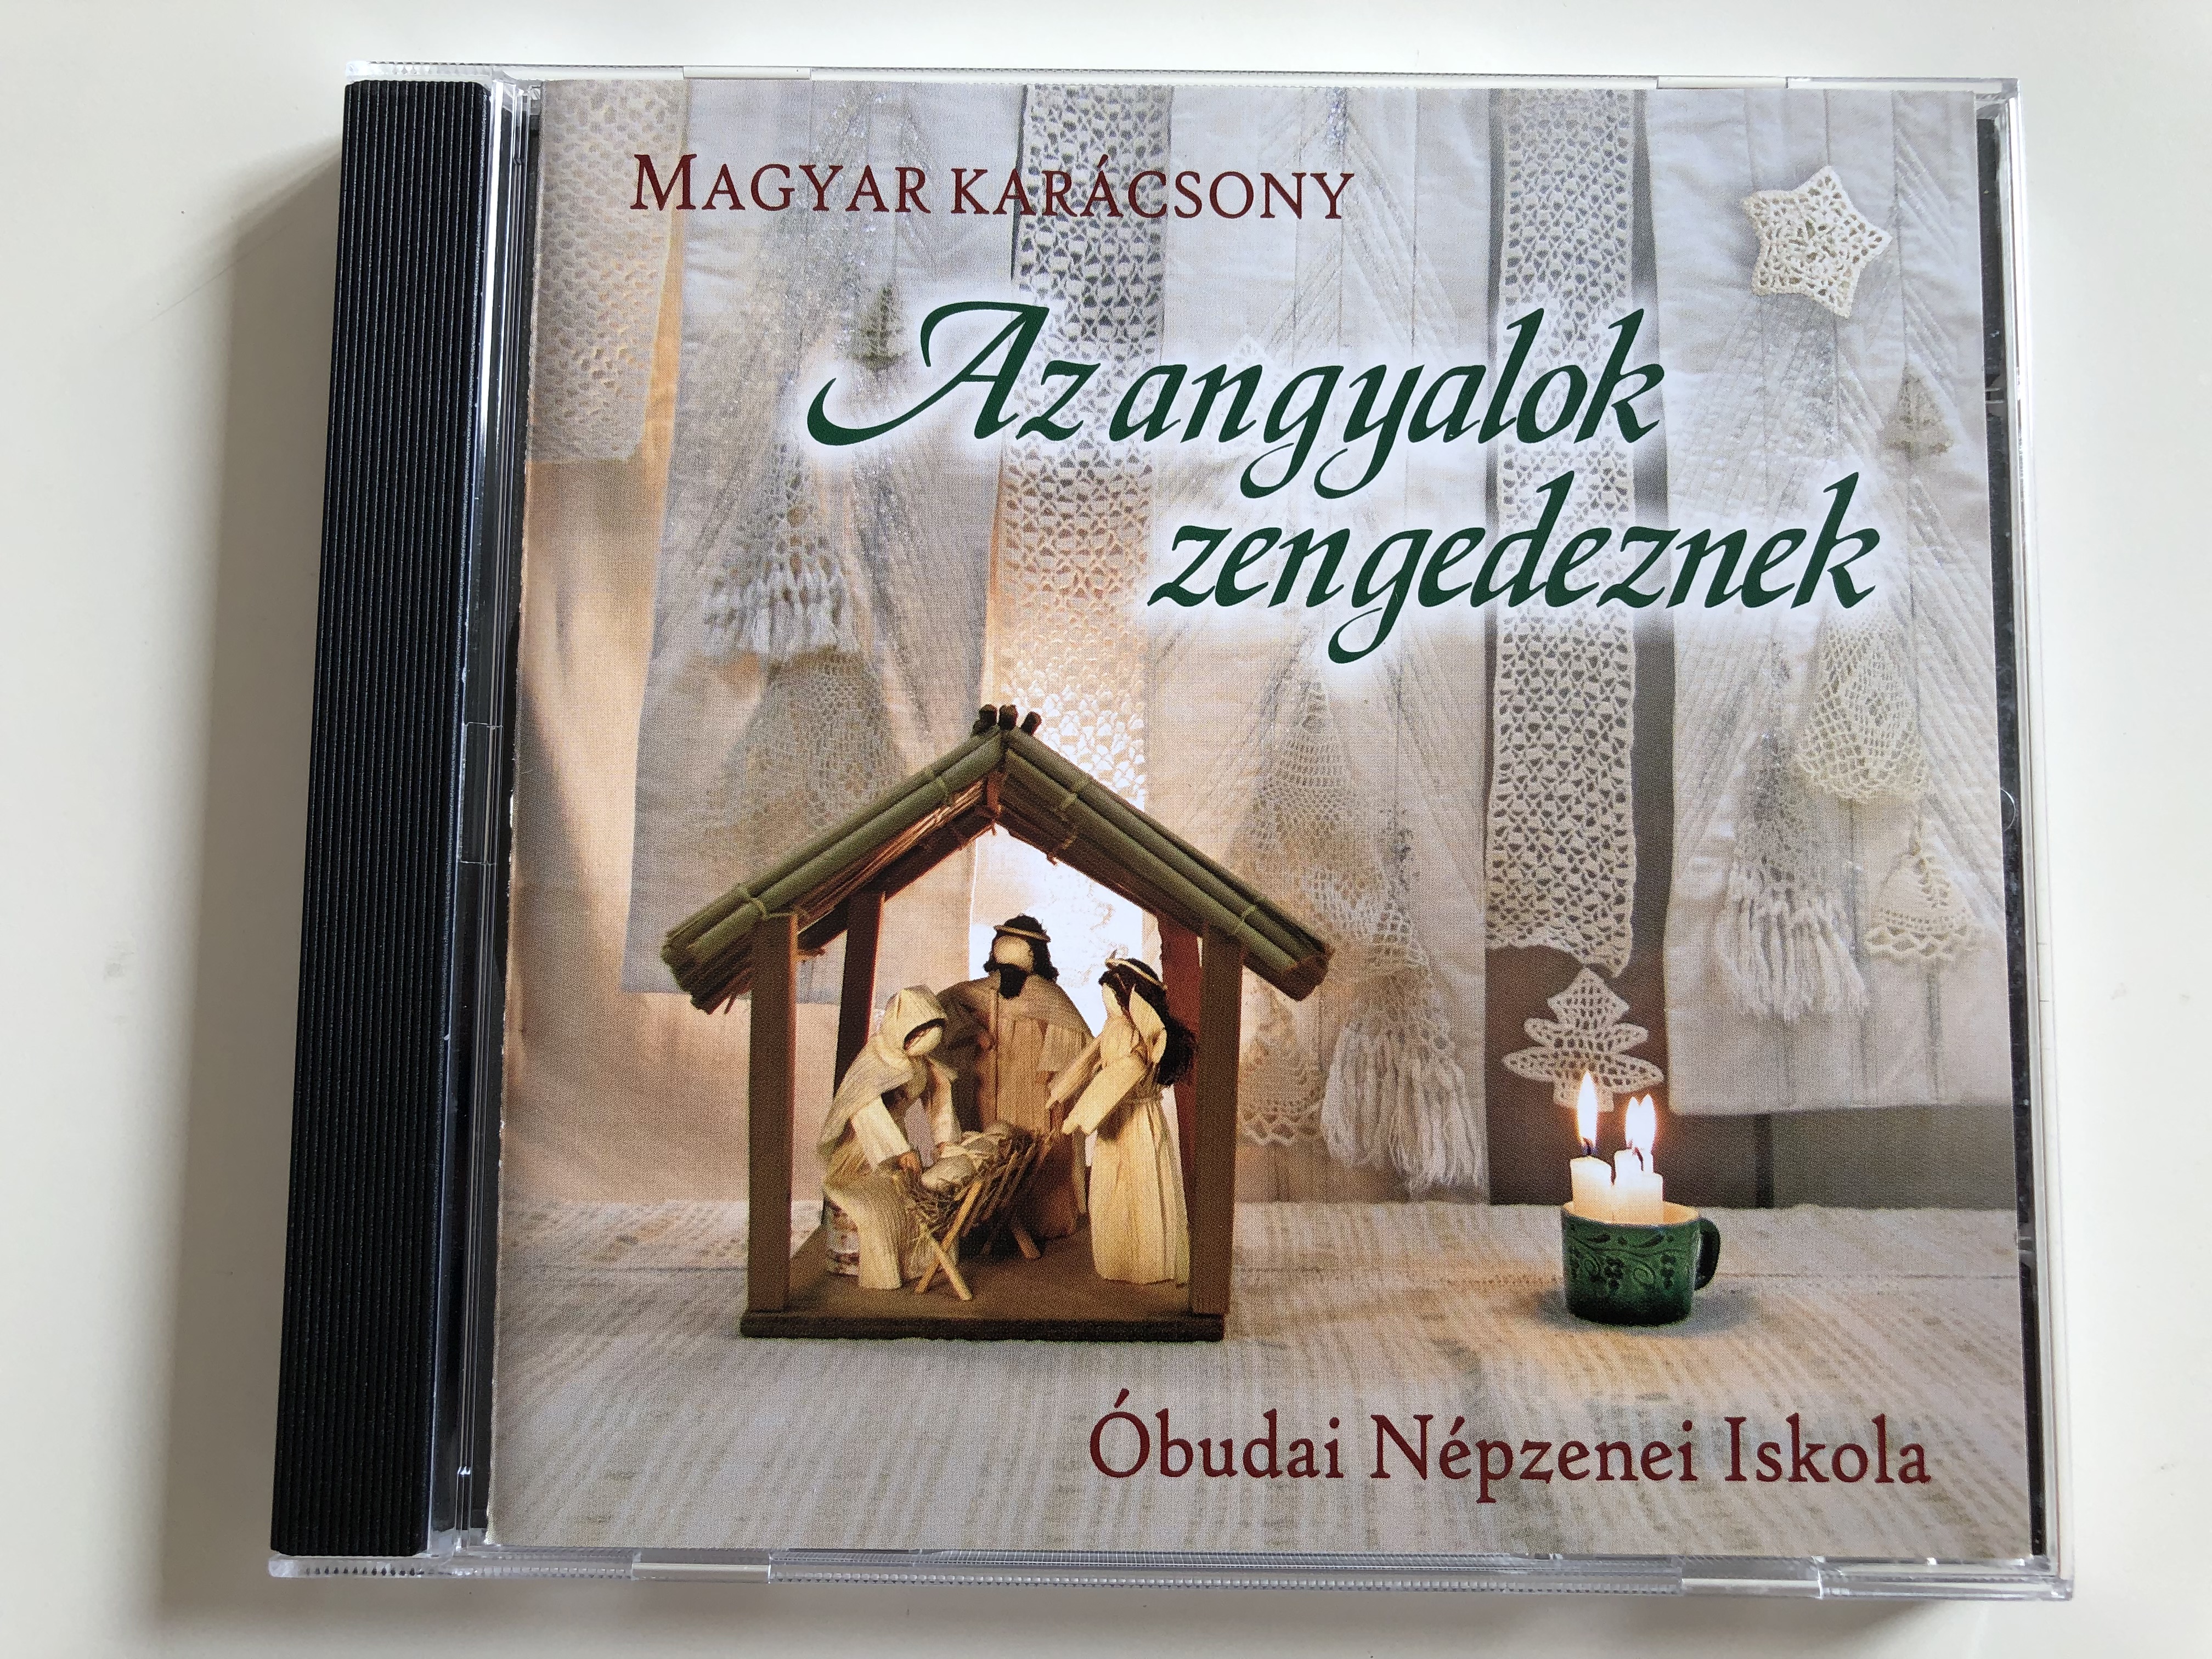 magyar-kar-csony-az-angyalok-zengedeznek-budai-n-pzenei-iskola-hungarian-christmas-songs-angels-are-singing-audio-cd-2009-dialekton-bs-cd11-1-.jpg